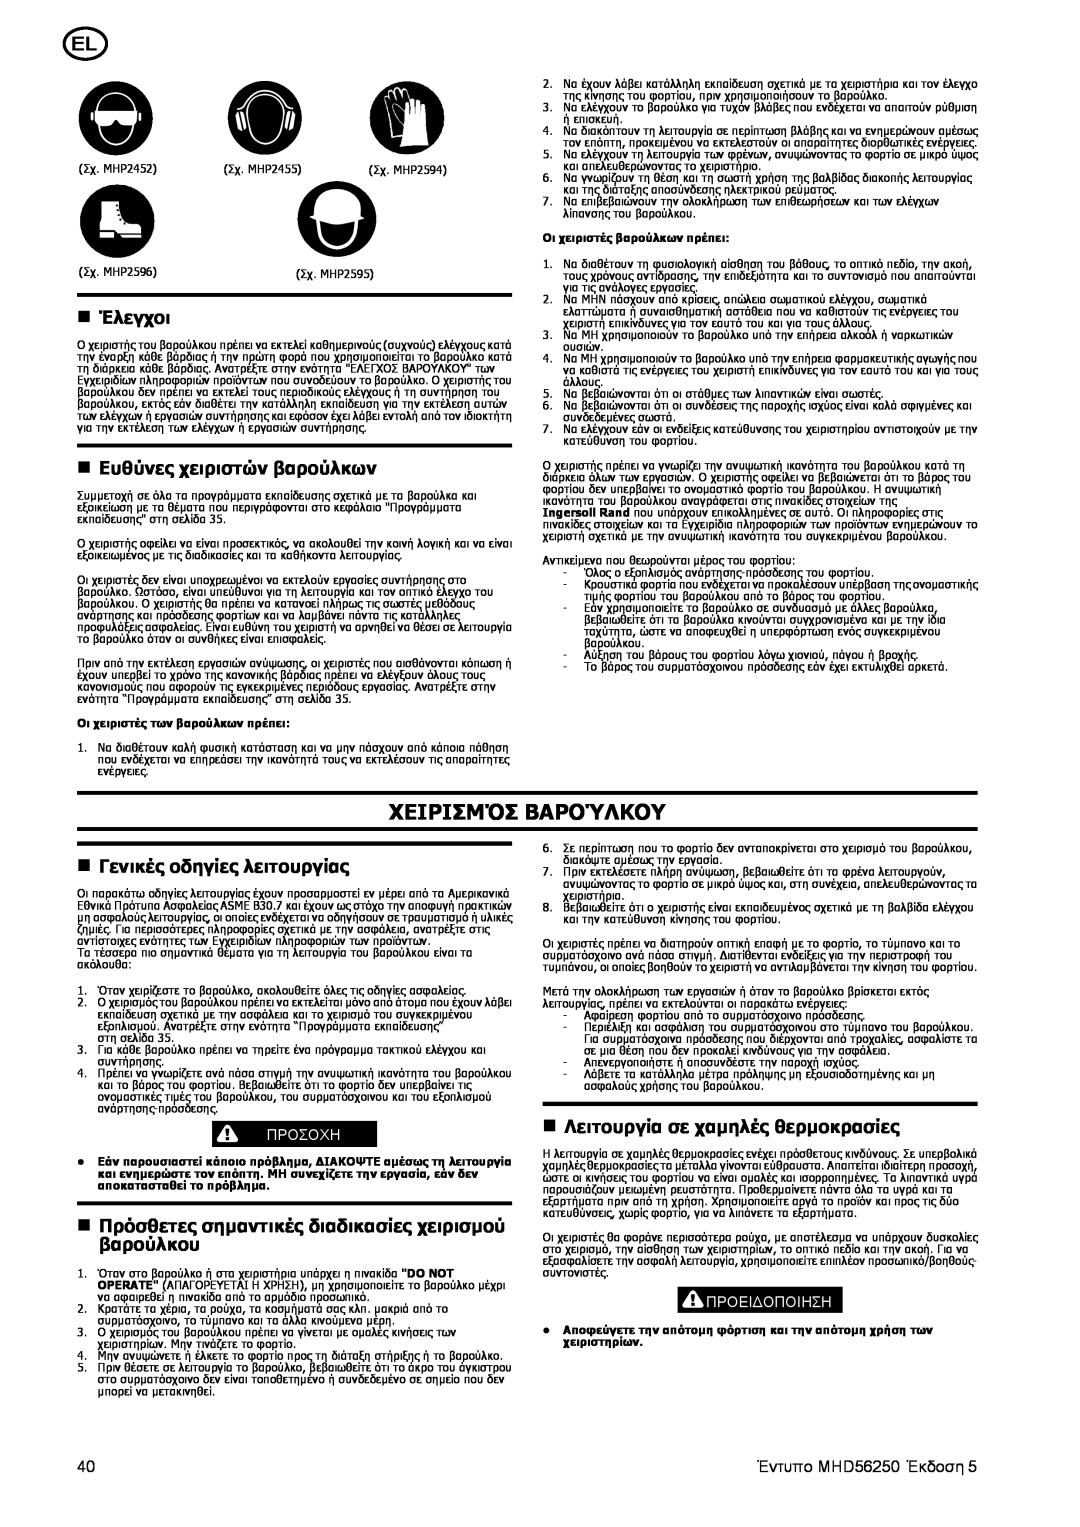 Ingersoll-Rand MHD56250 manual Χειρισμόσ Βαρούλκου, n Έλεγχοι, n Ευθύνες χειριστών βαρούλκων, n Γενικές οδηγίες λειτουργίας 